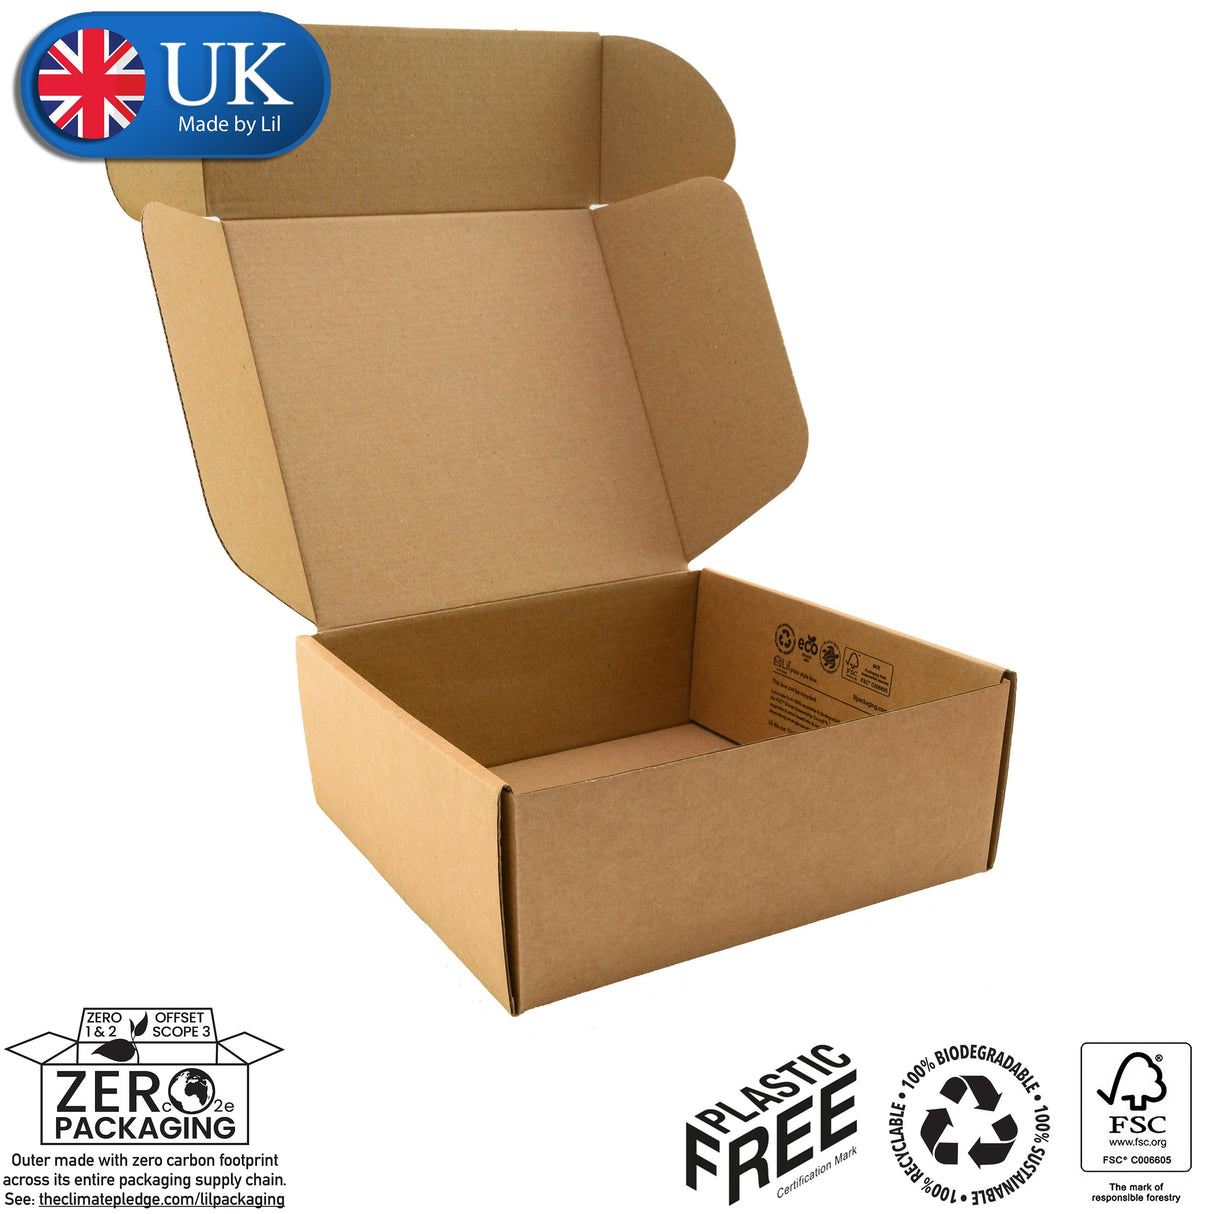 28x20x13cm (11x8x5" inches) Cardboard Postal Box